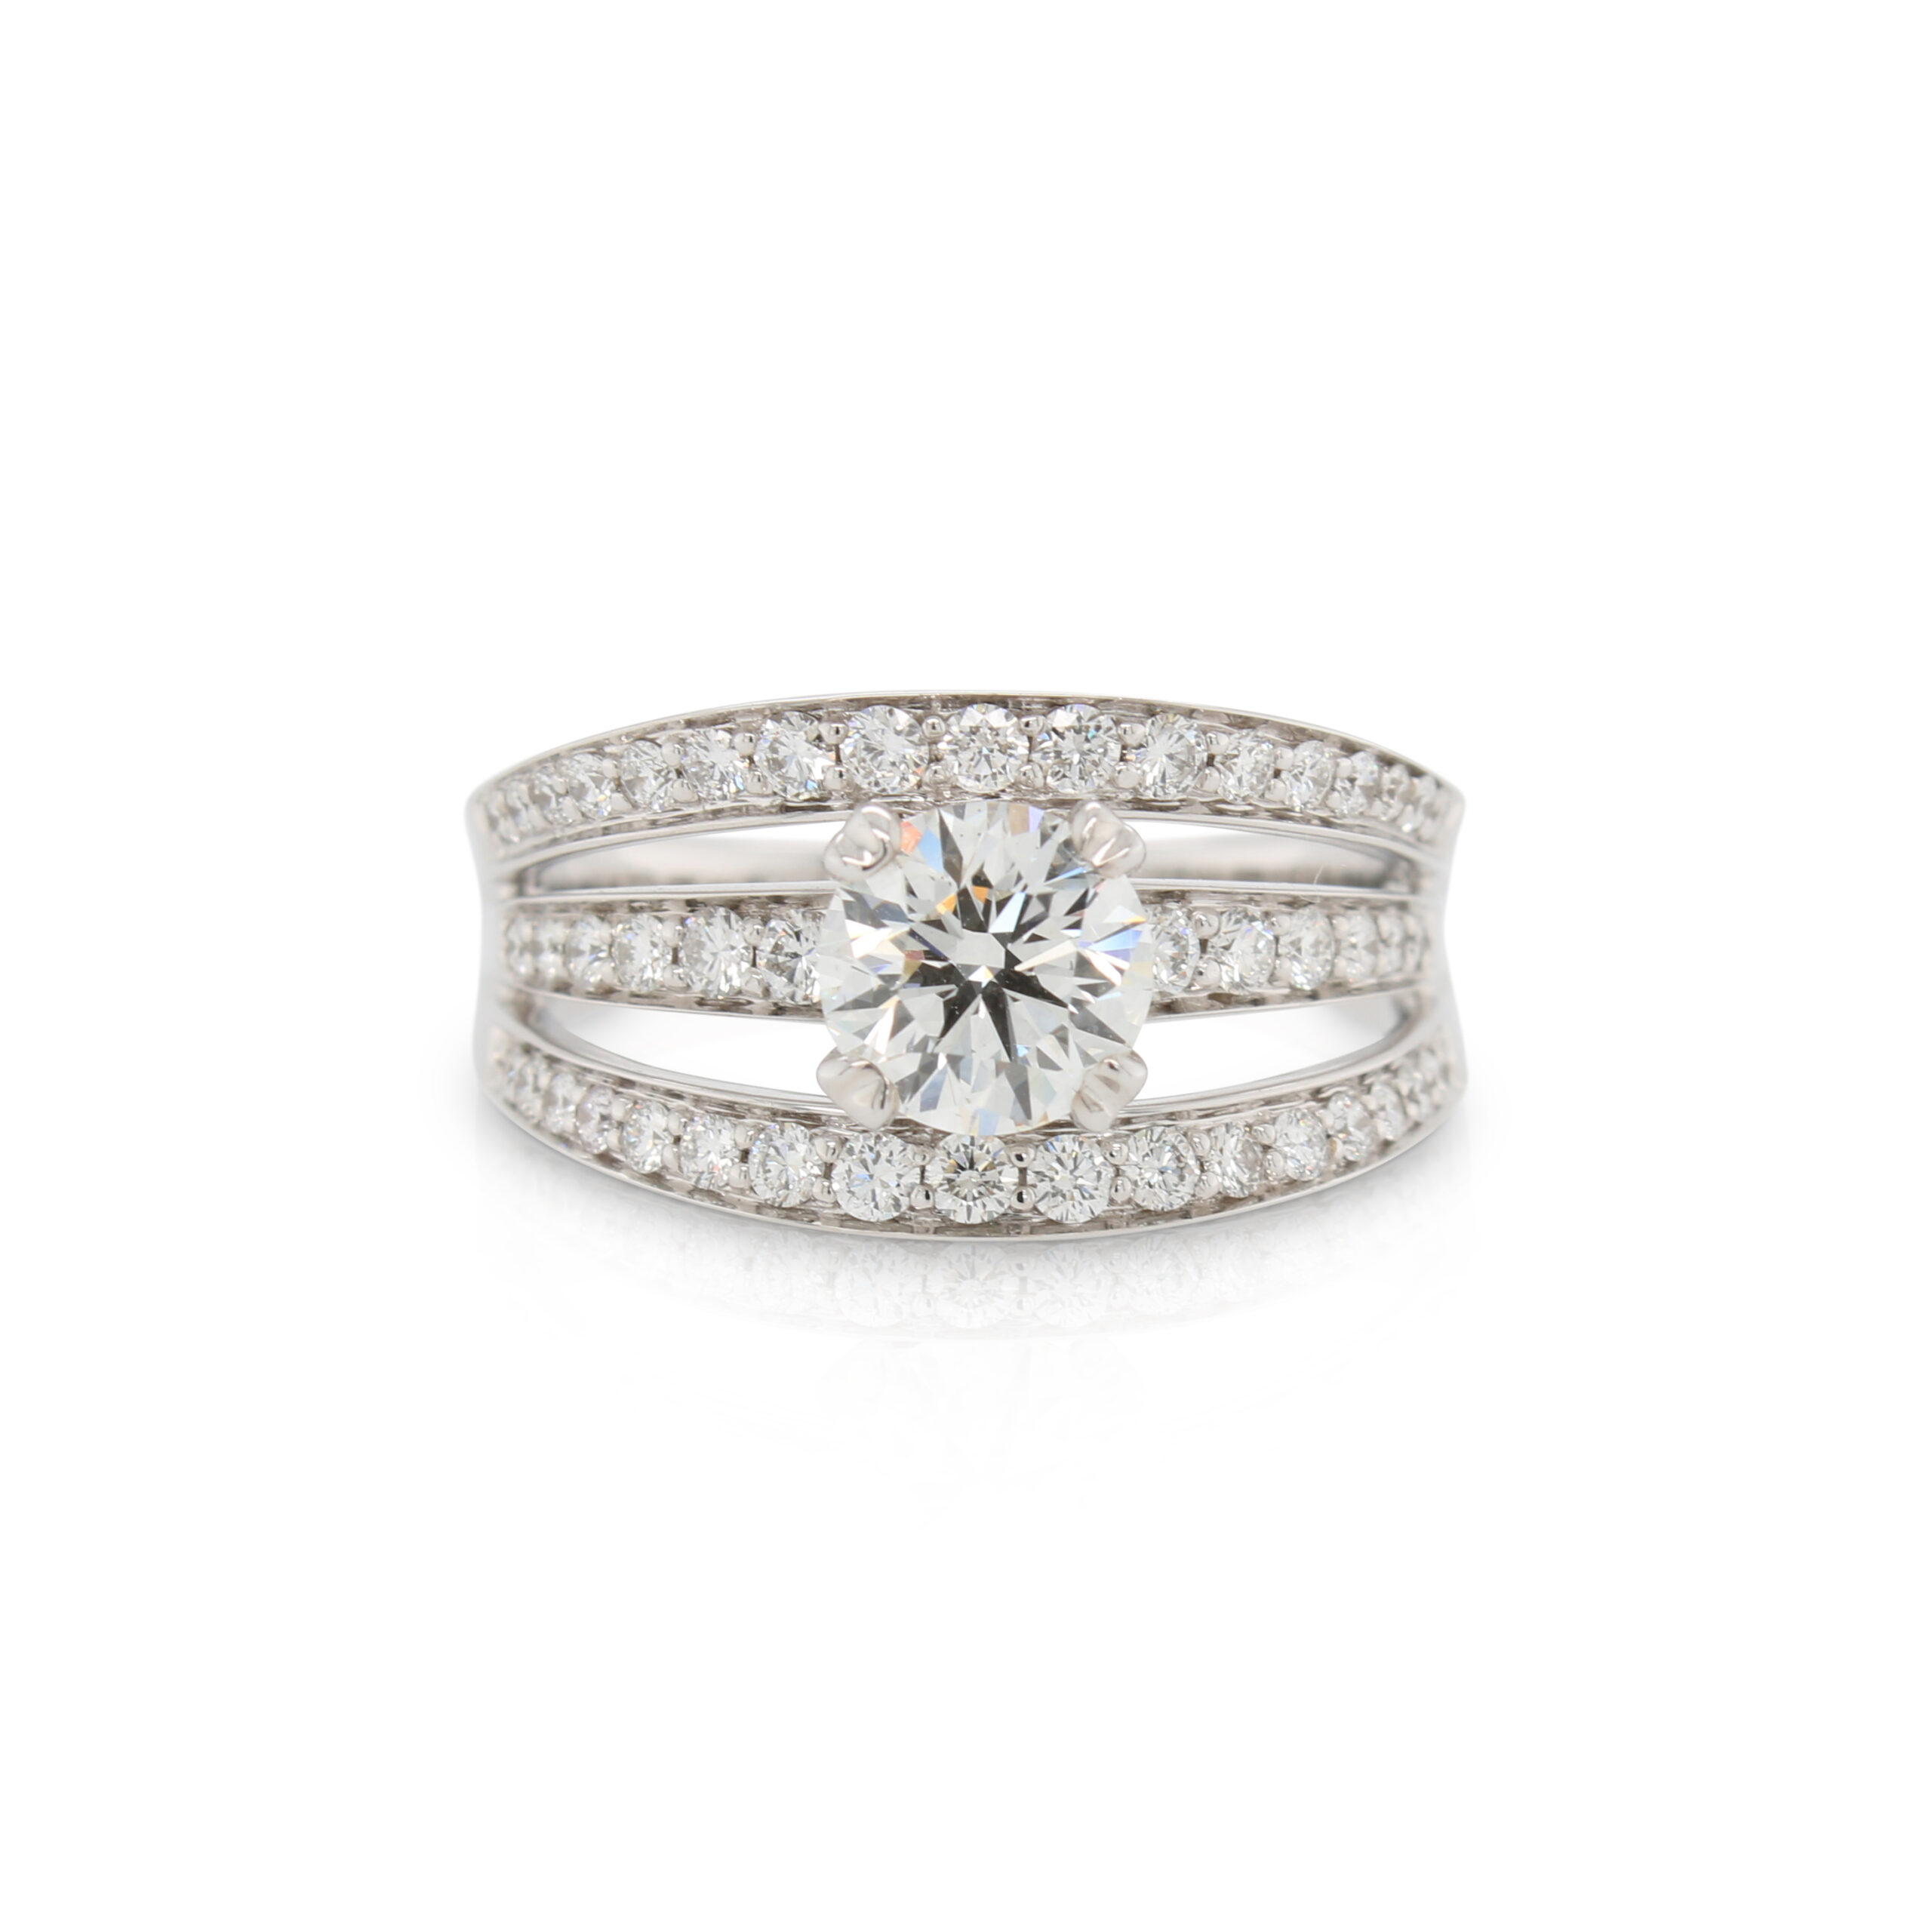 012273Split-Shank-Tri-Row-Engagement-Ring.jpg